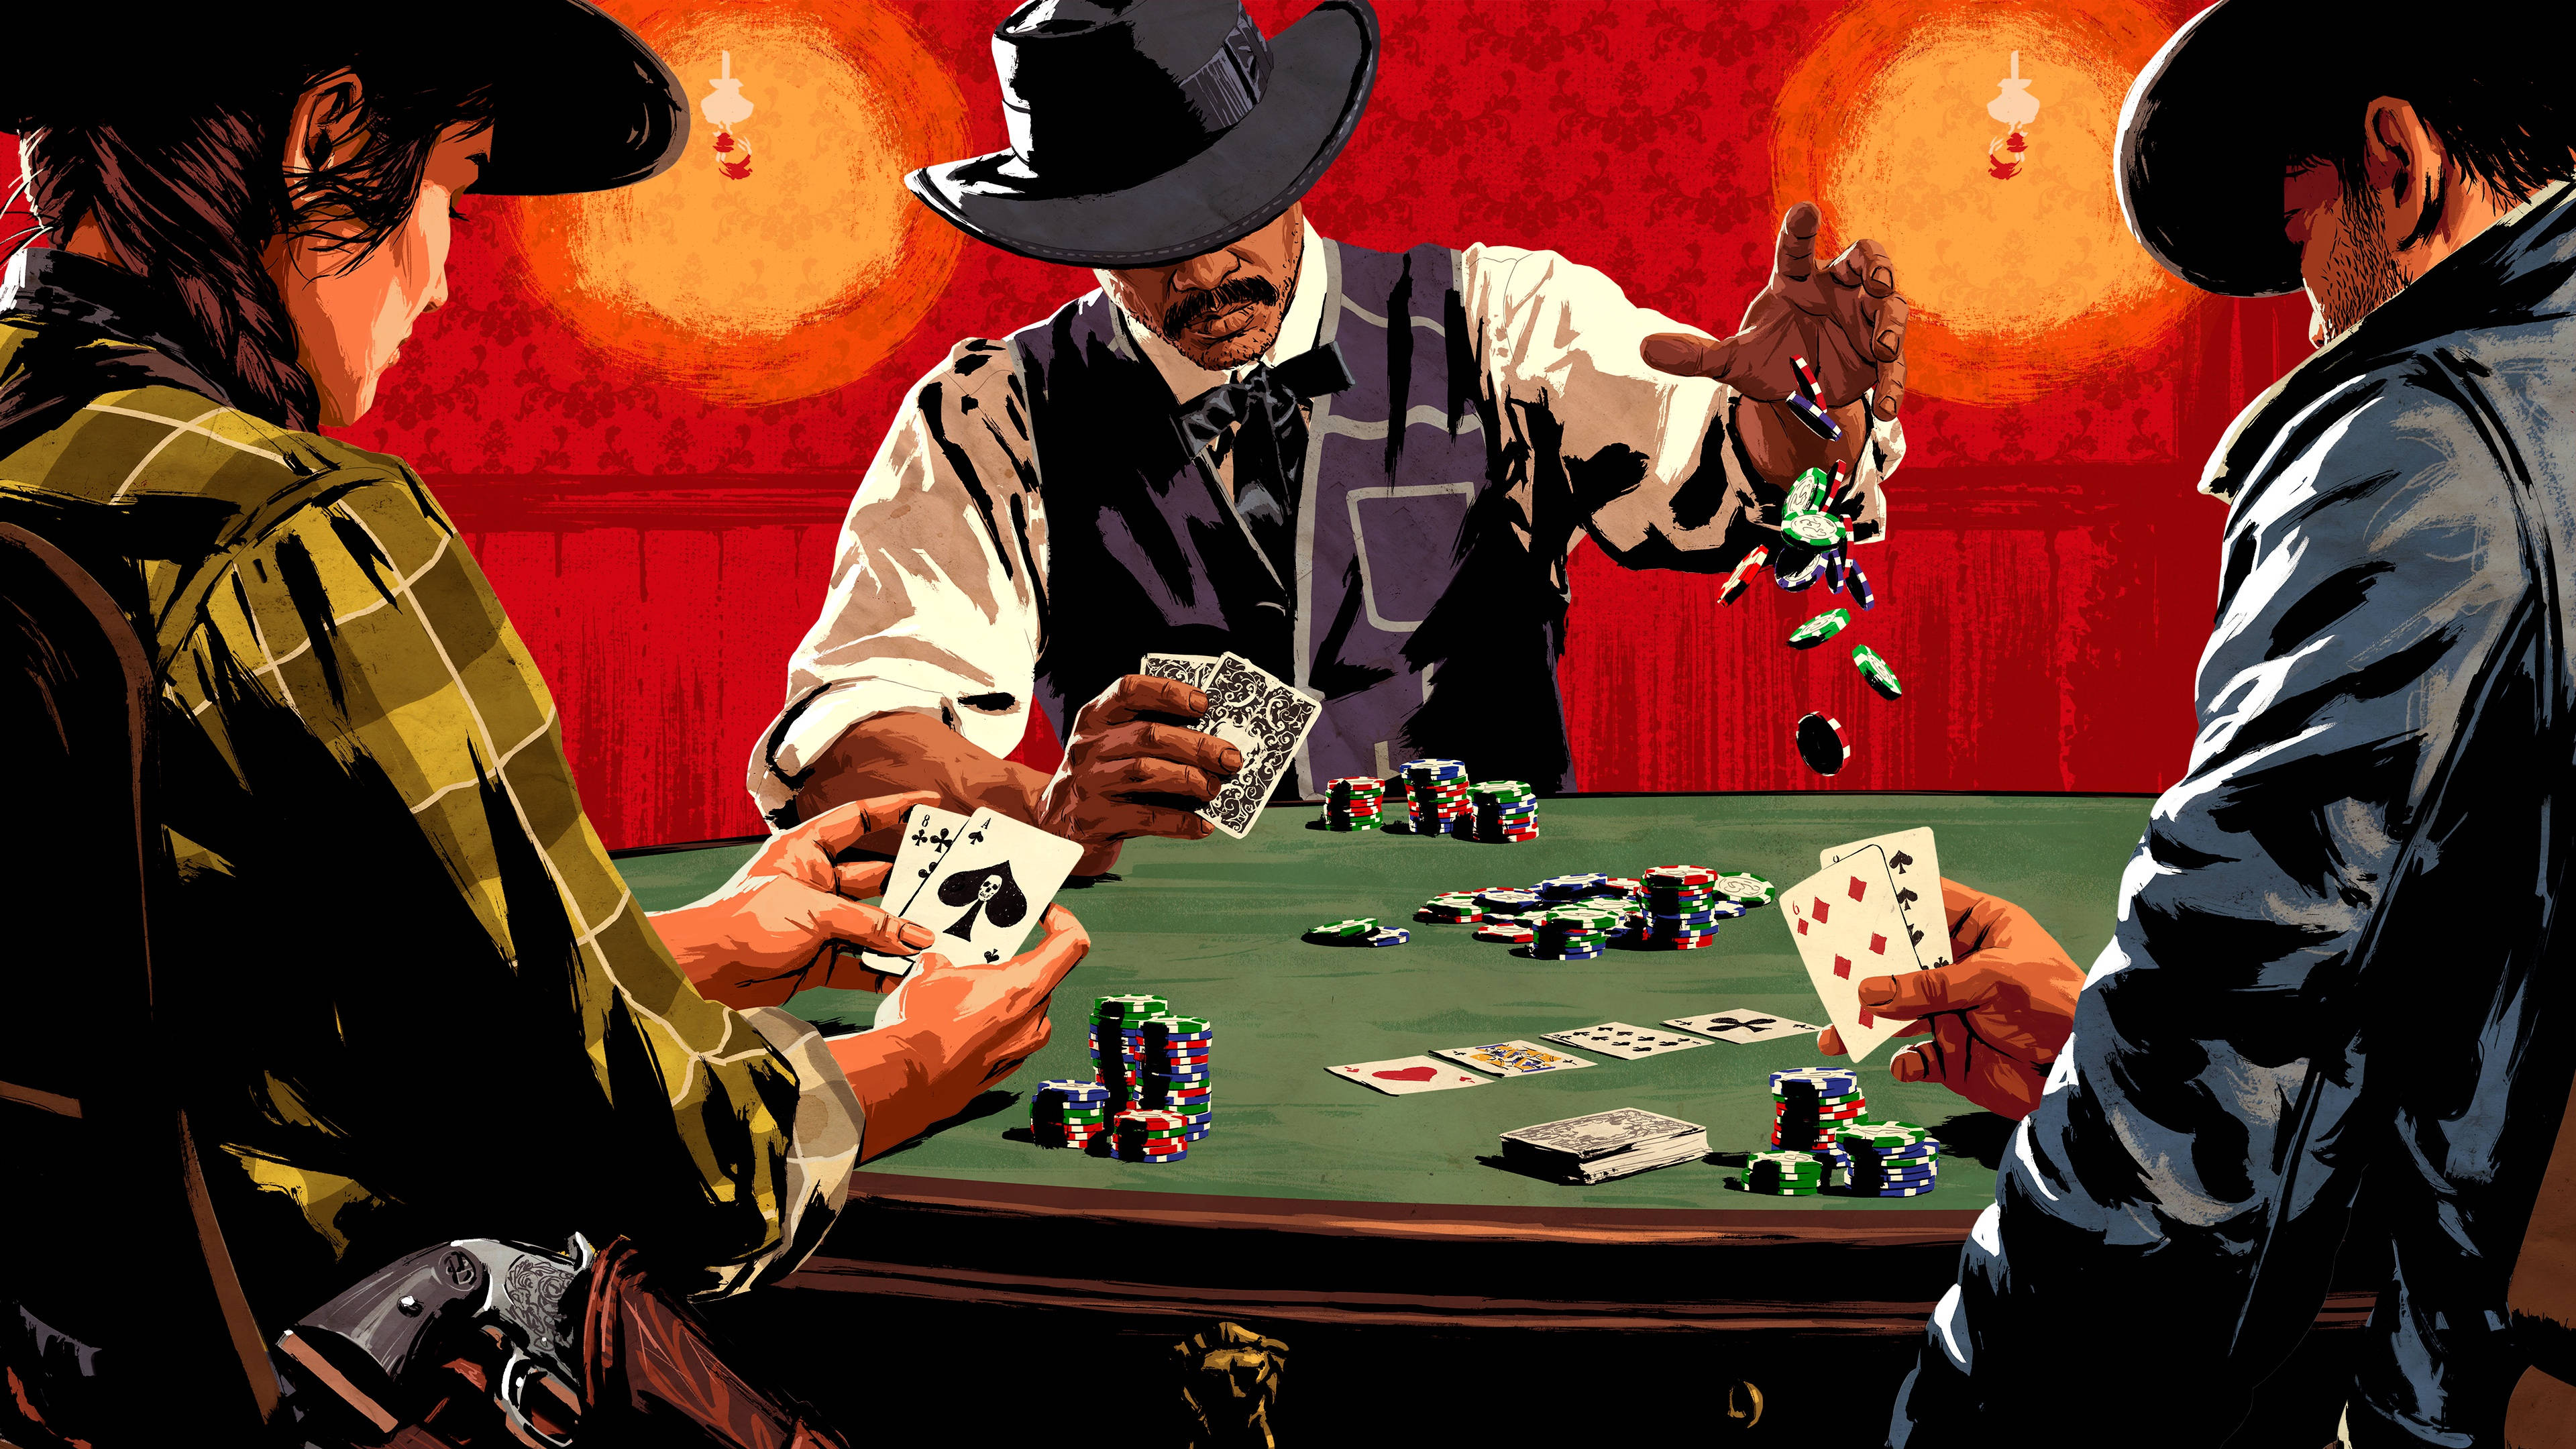 Pokerred Dead Redemption 2 Wallpaper